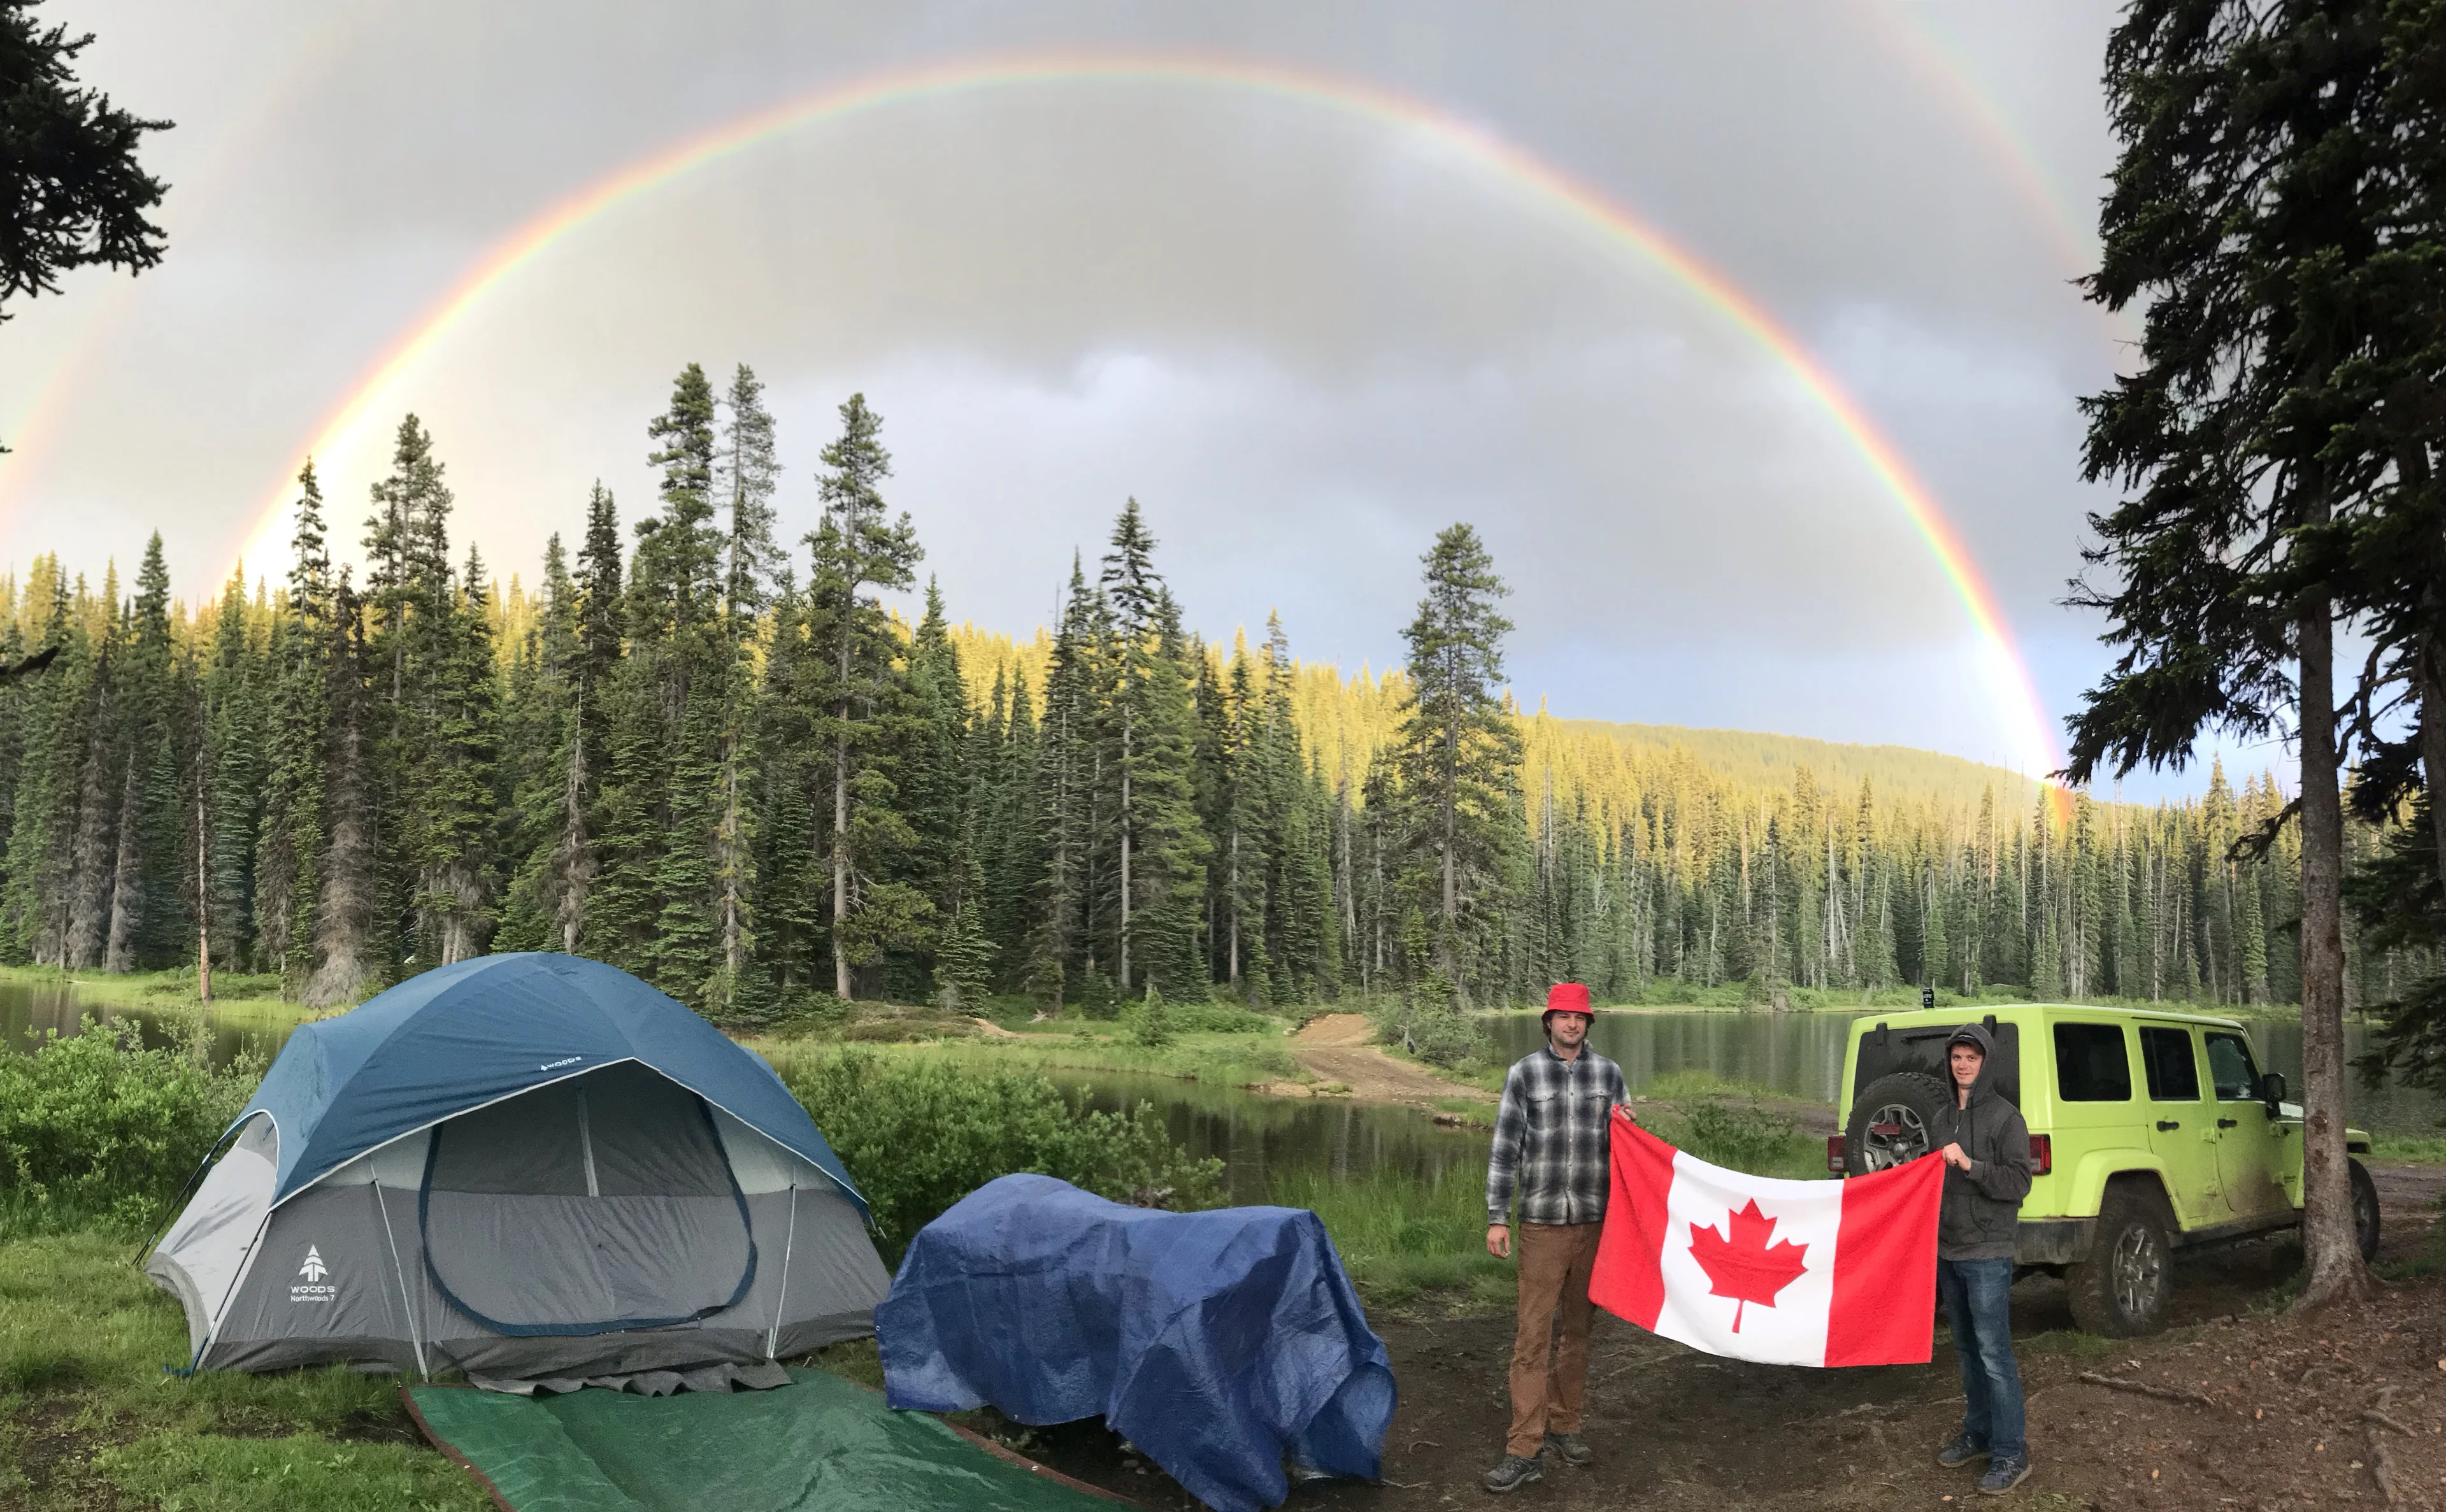 Camping - Tracy Gillingham, Wells Lake Okanagan BC - June 26 2019